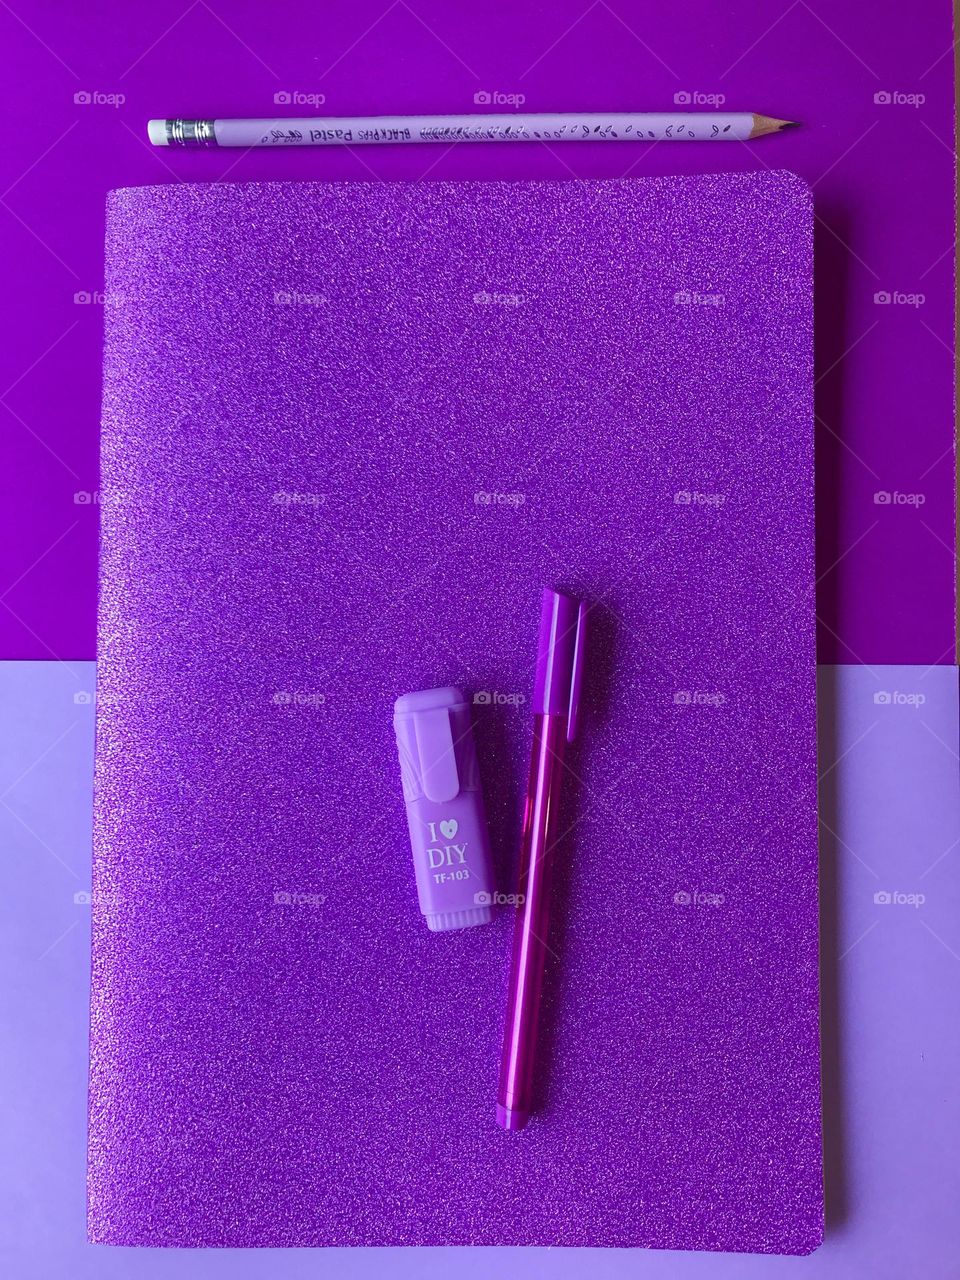 Purple notebook